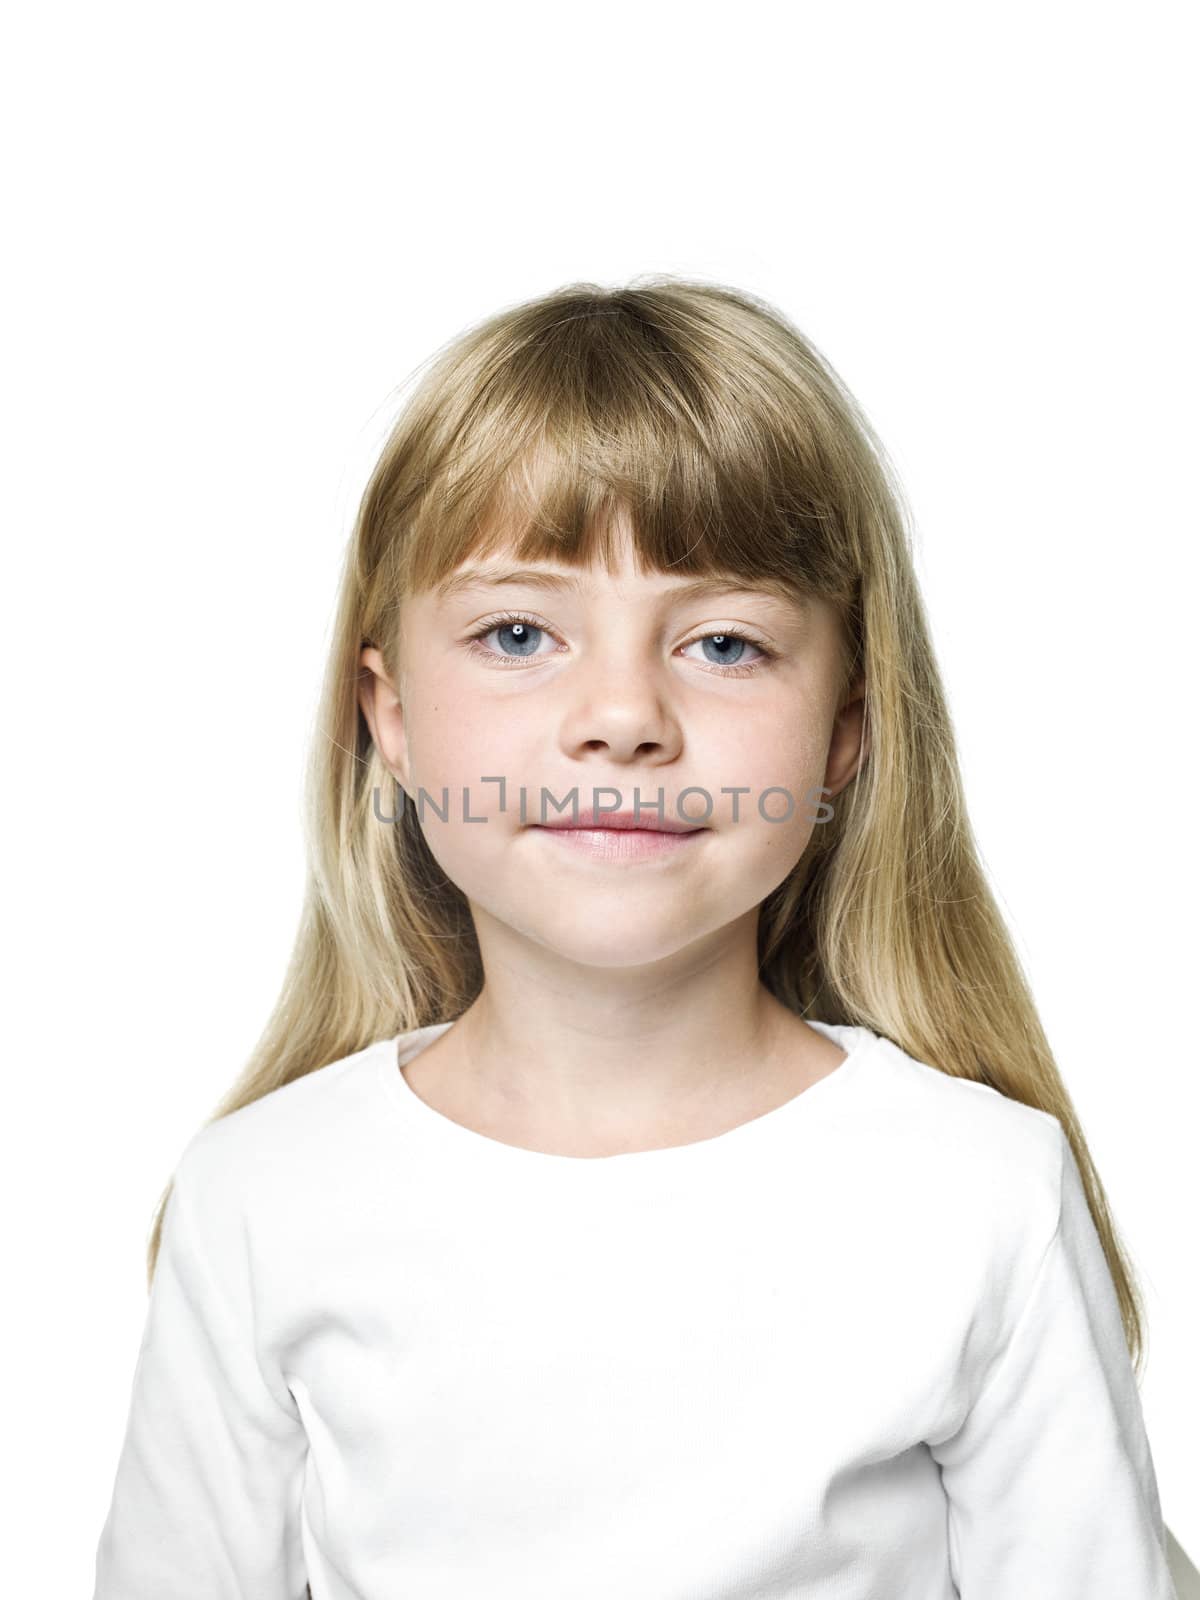 Little Girl Portrait by gemenacom